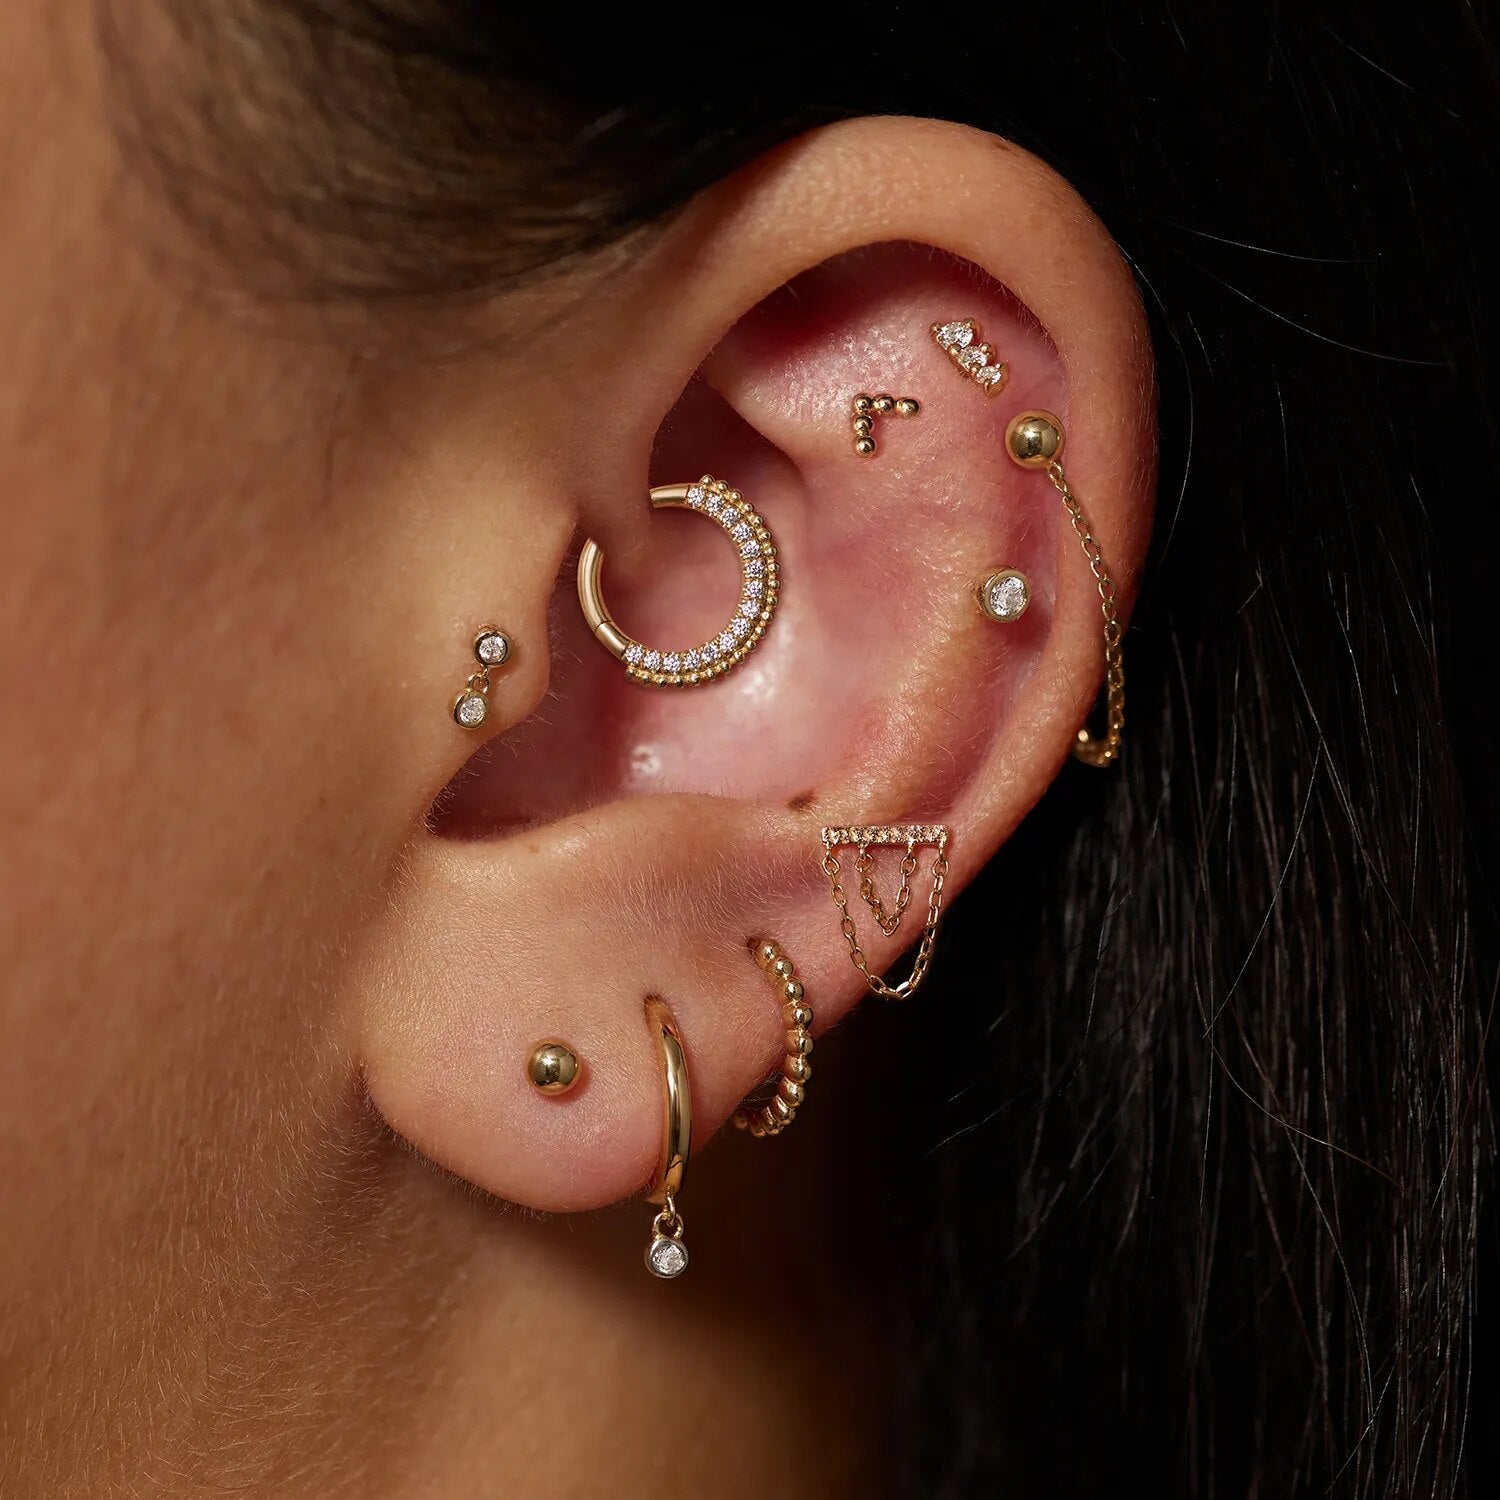 14K gold helix earring with chains conch earrings earlobe piercing jewelry labret stud Ashley Piercing Jewelry